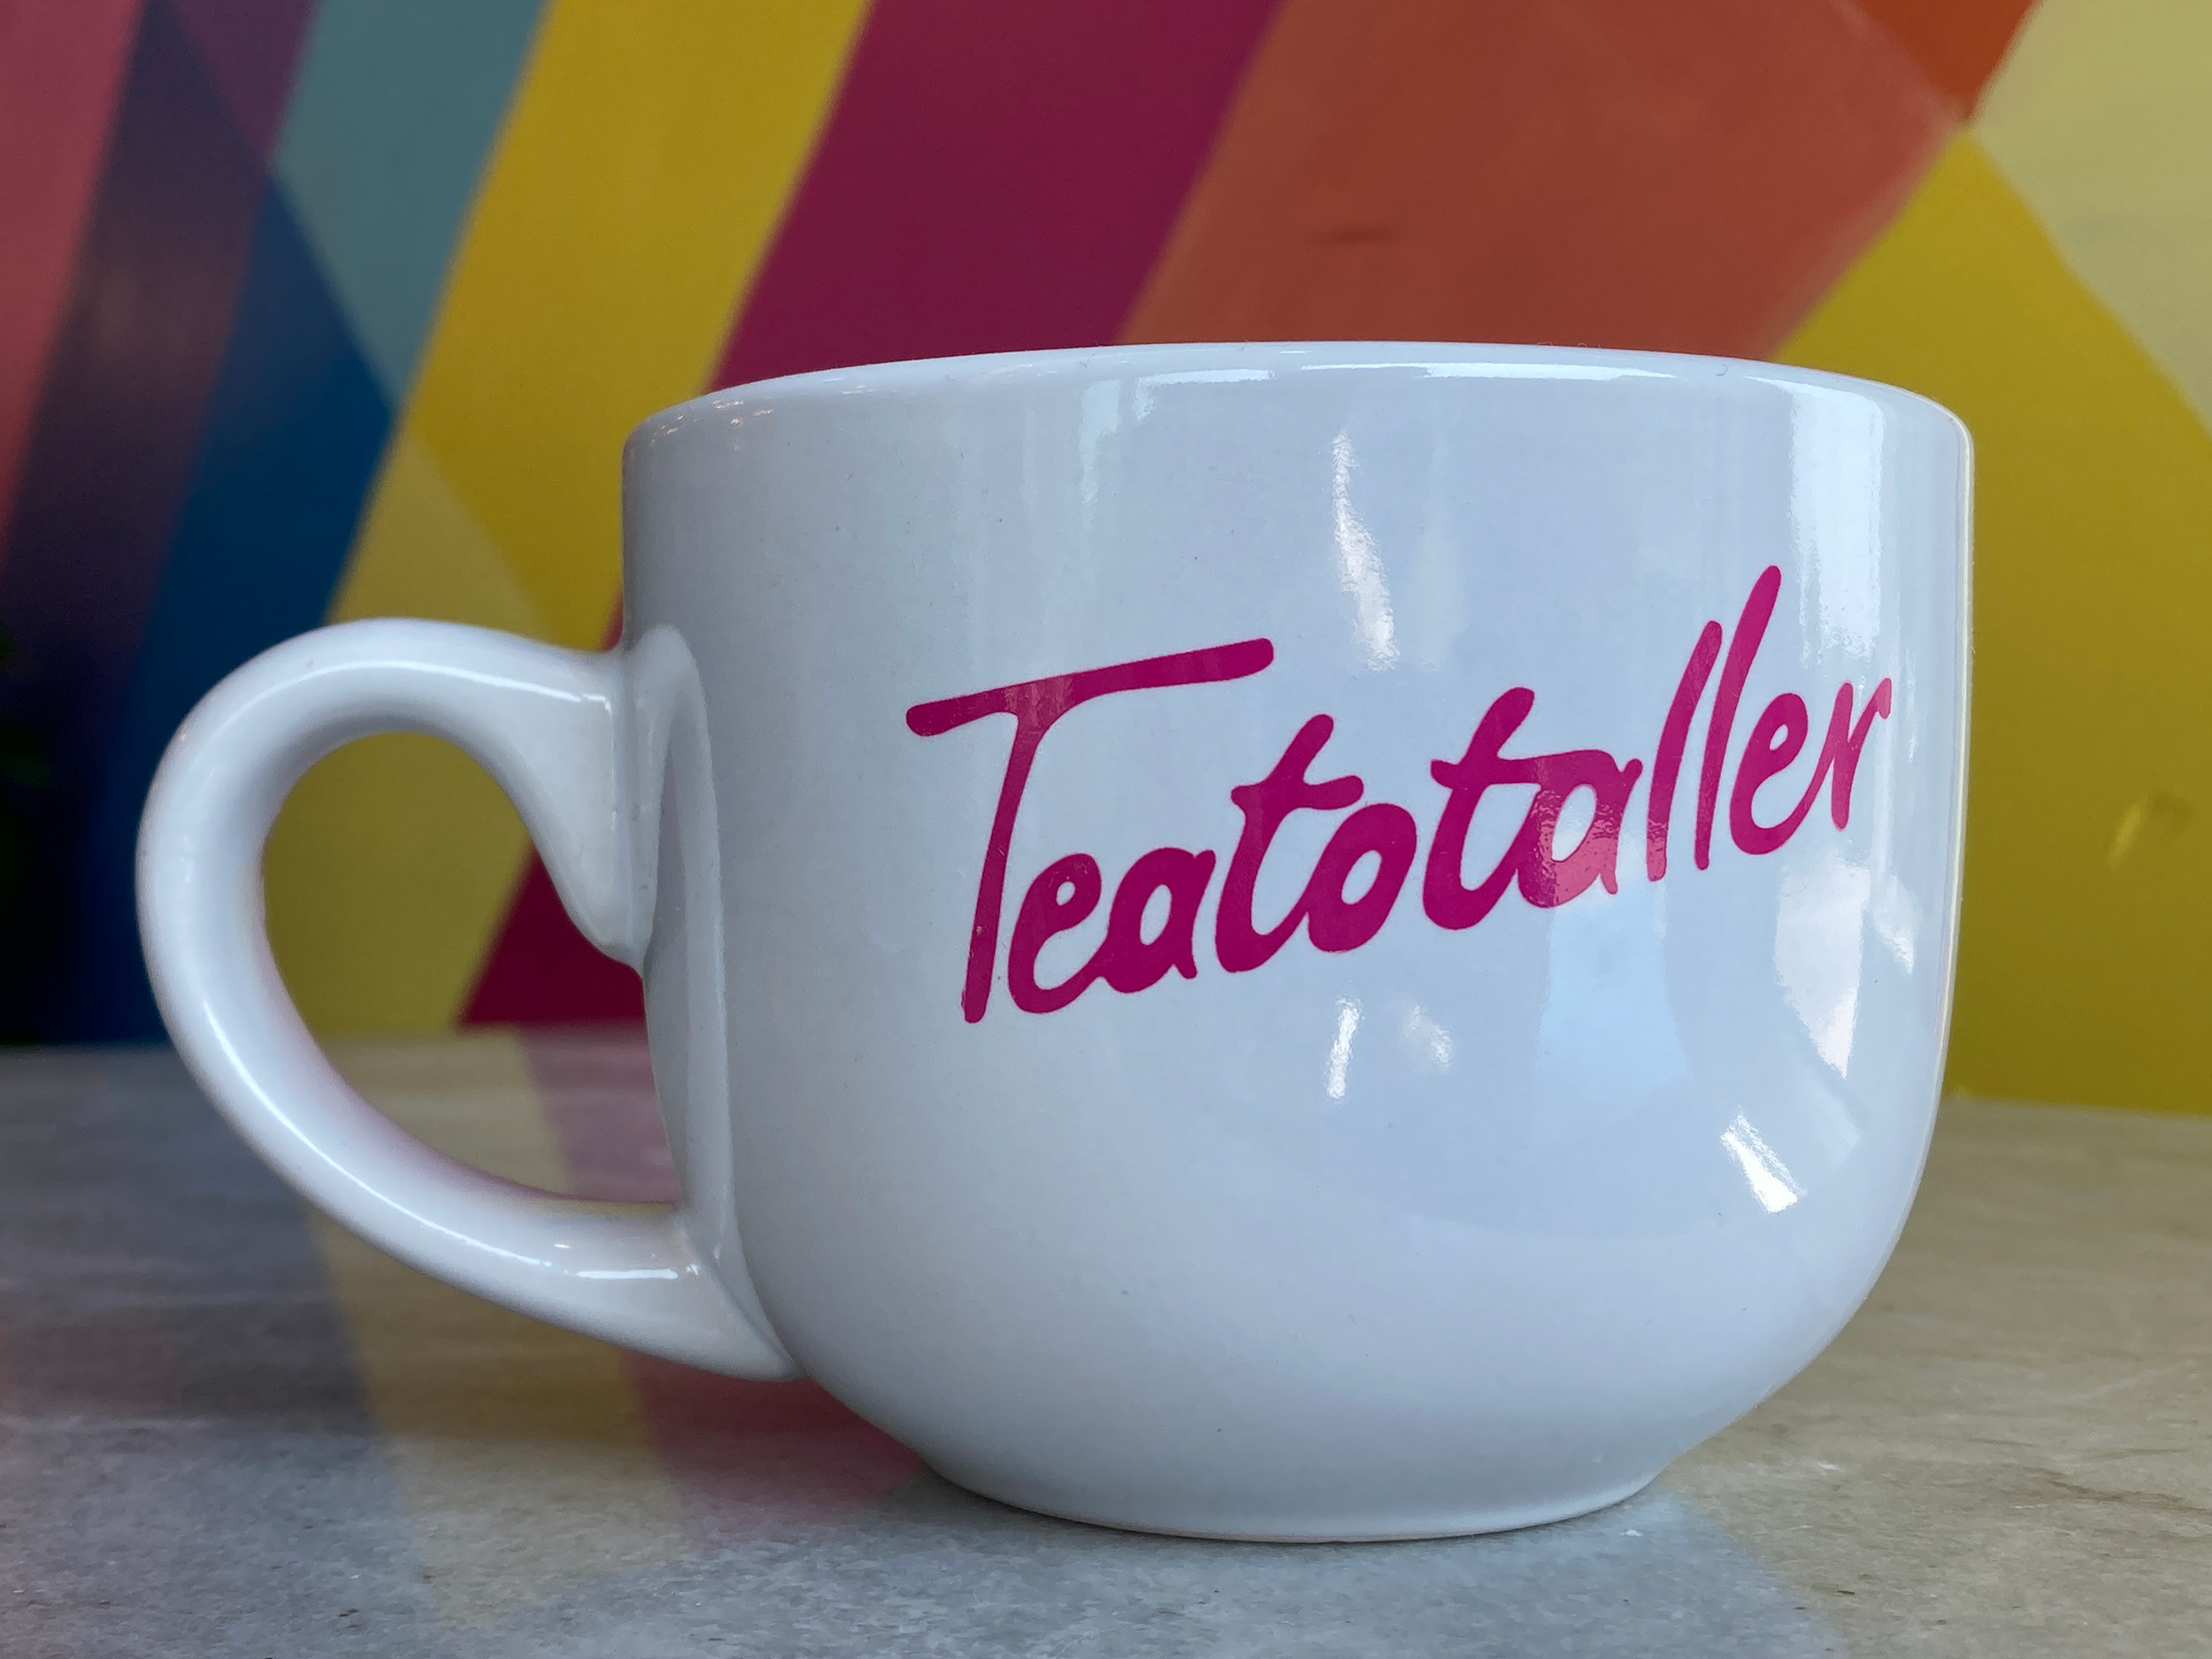 White mug with pink font - Teatotaller